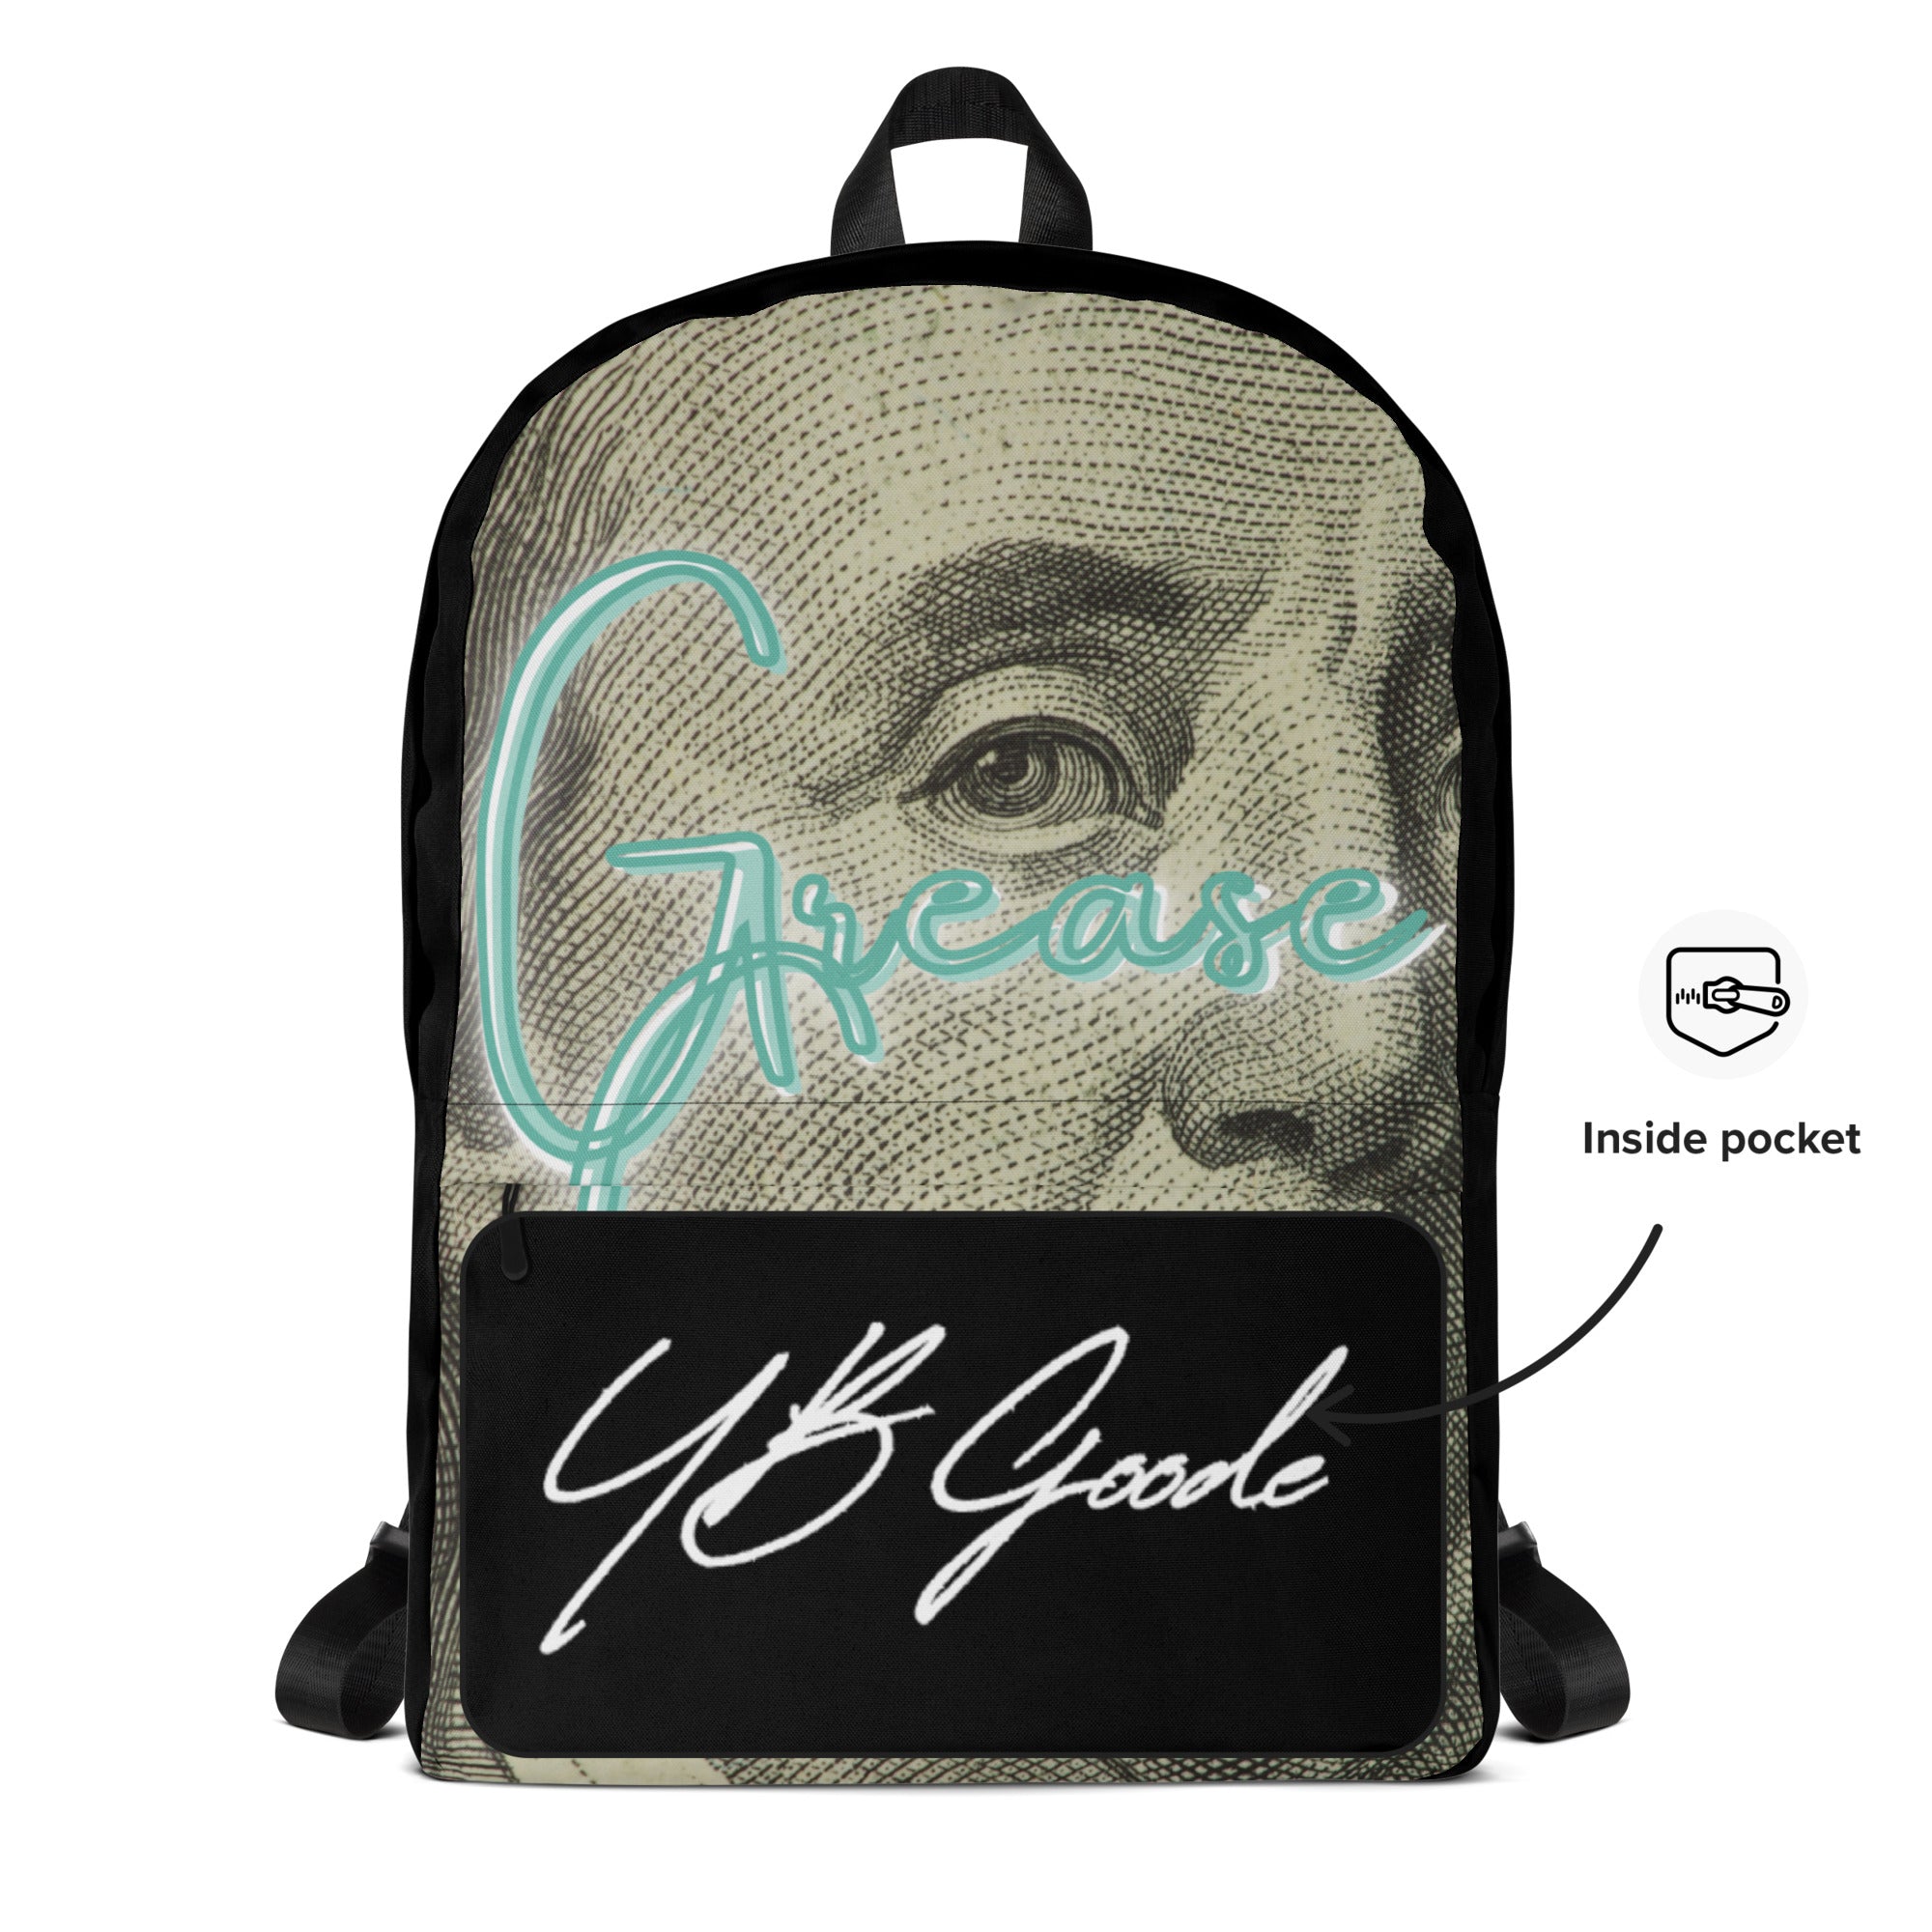 YB Goode GG Backpack